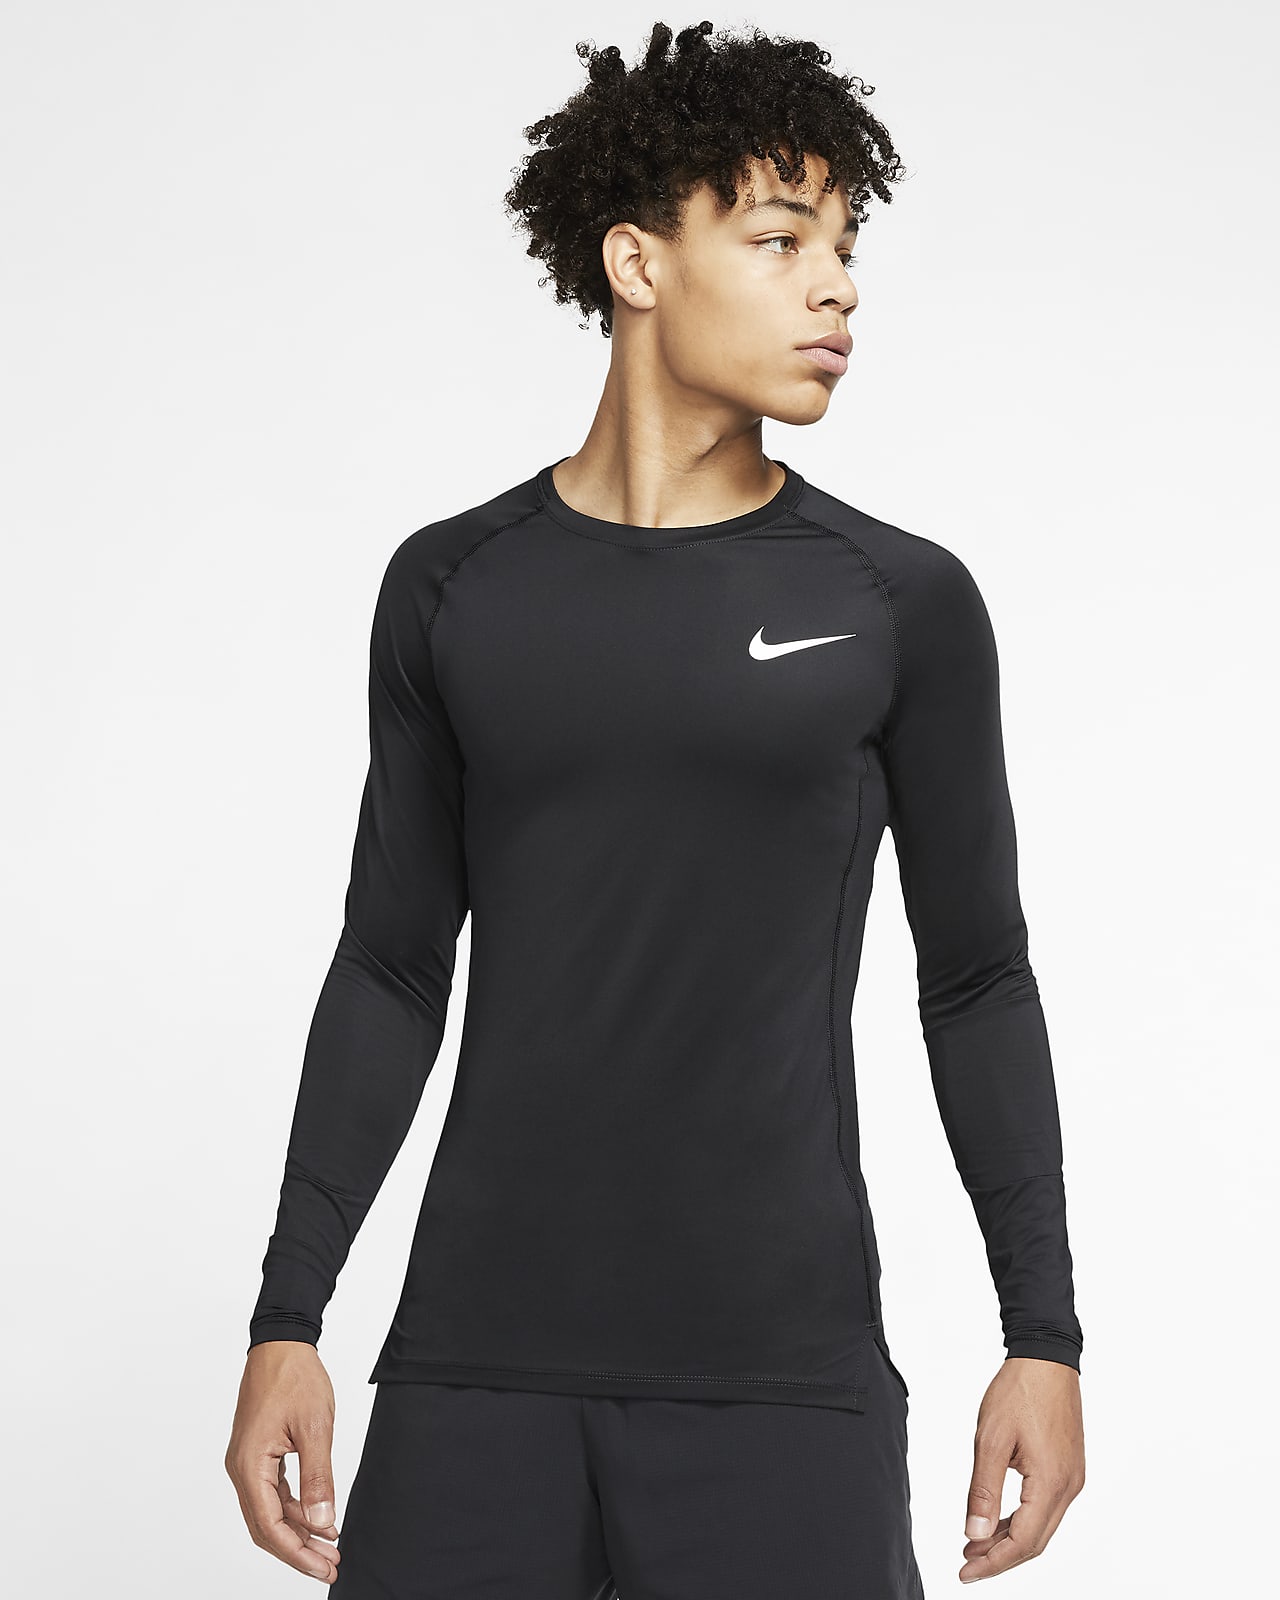 piece domestic accelerator Nike Pro Men's Tight Fit Long-Sleeve Top. Nike.com